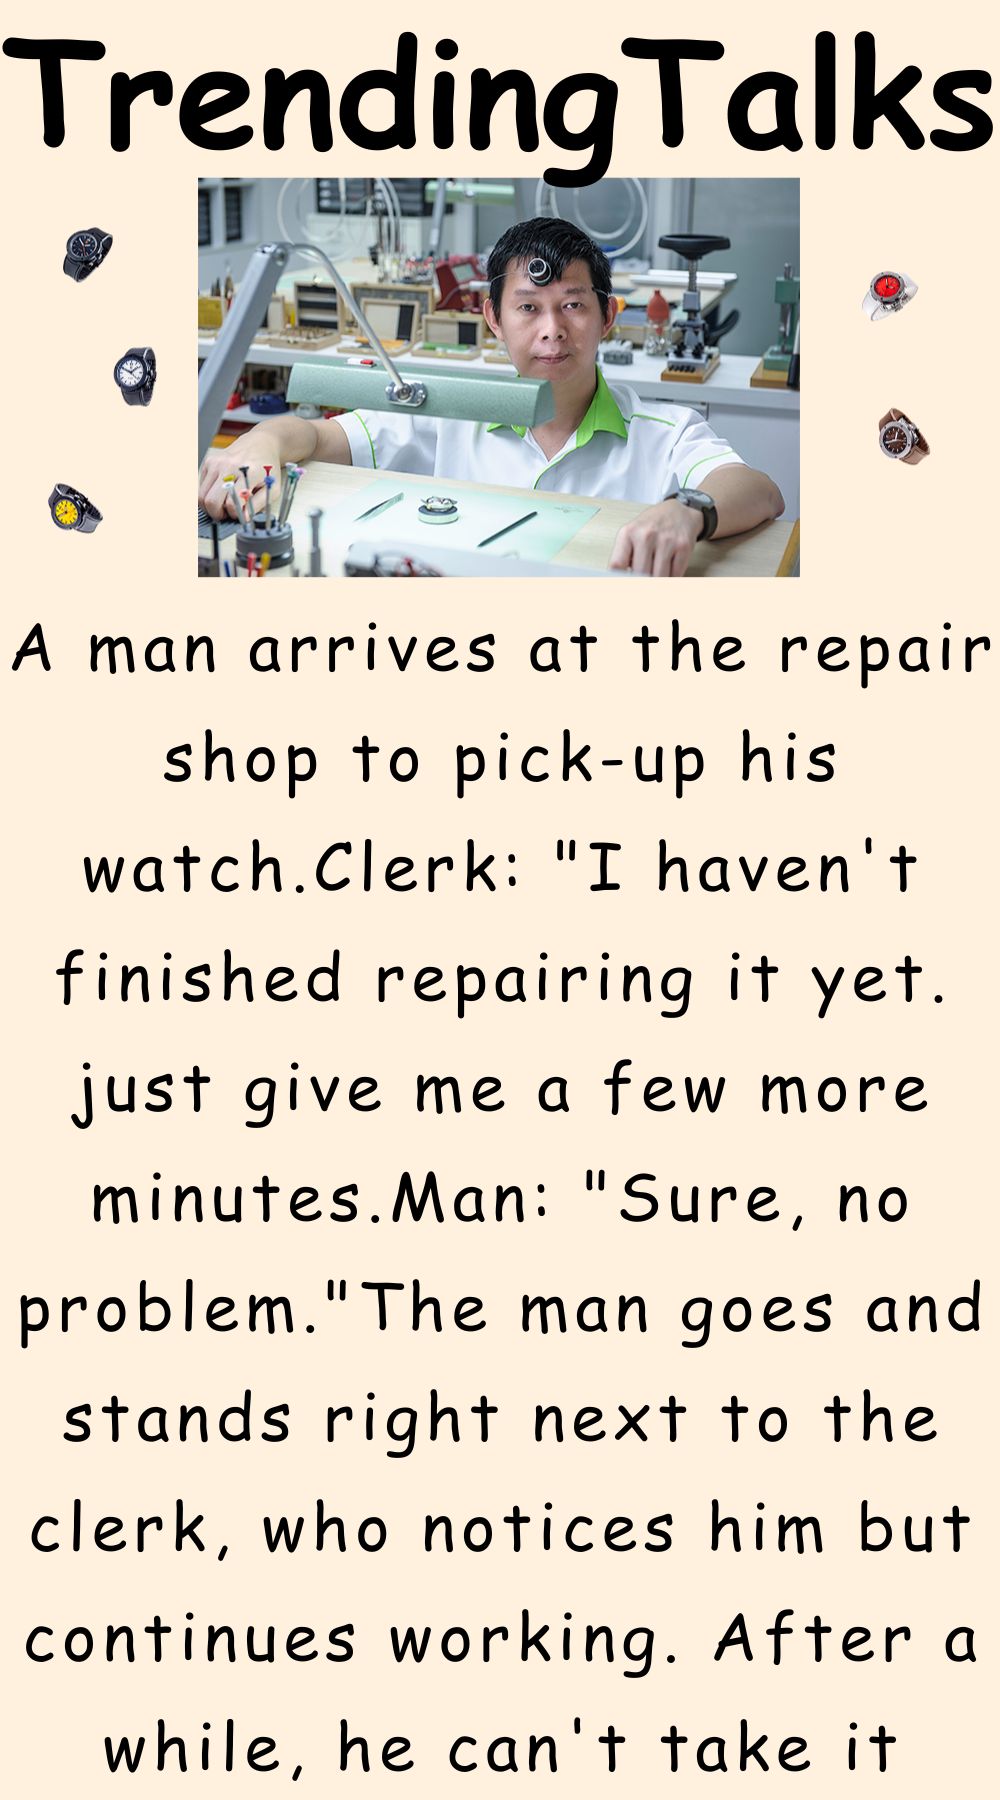 A man arrives at the repair shop 